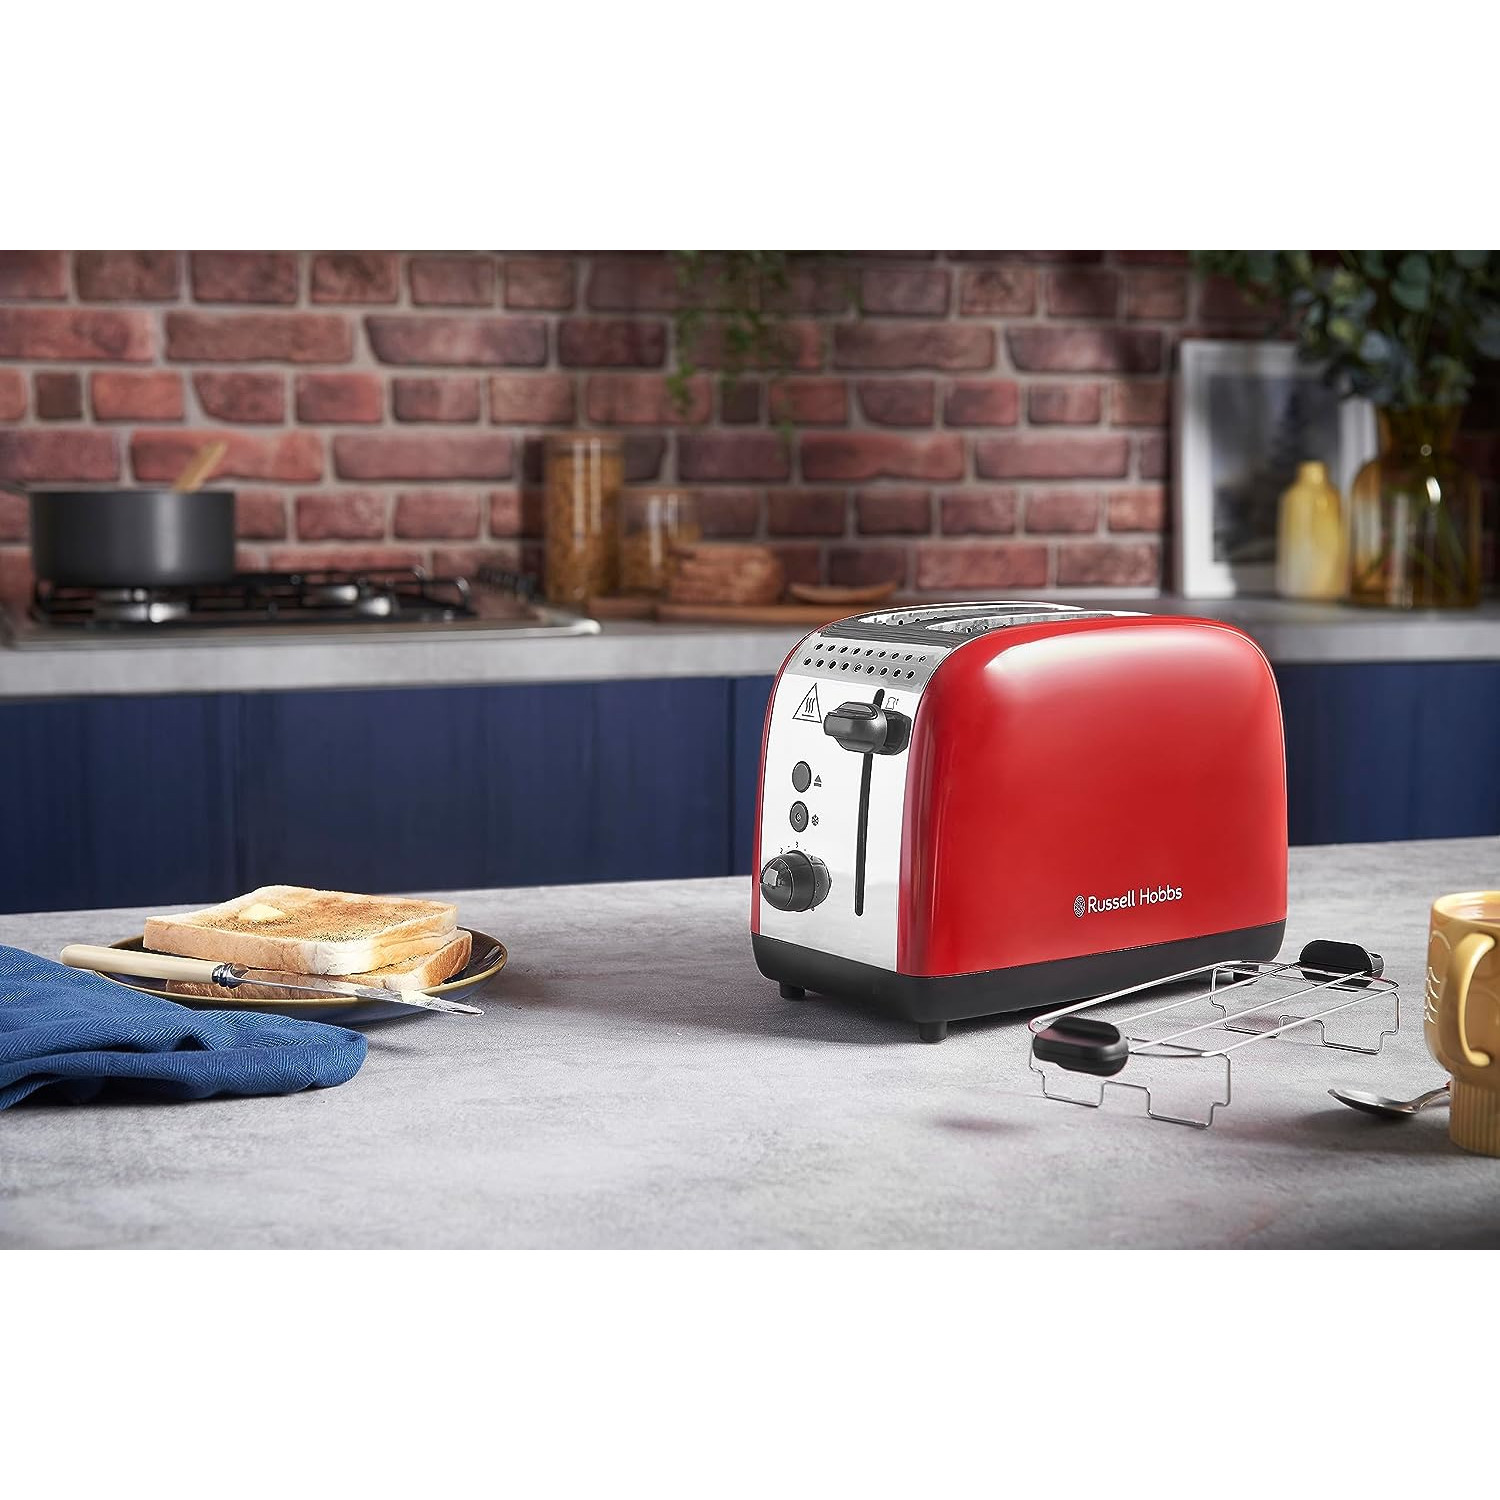 Schlitze: Plus Colours HOBBS 26554-56 Toaster Watt, RUSSELL 2) (1600 Rot Rot